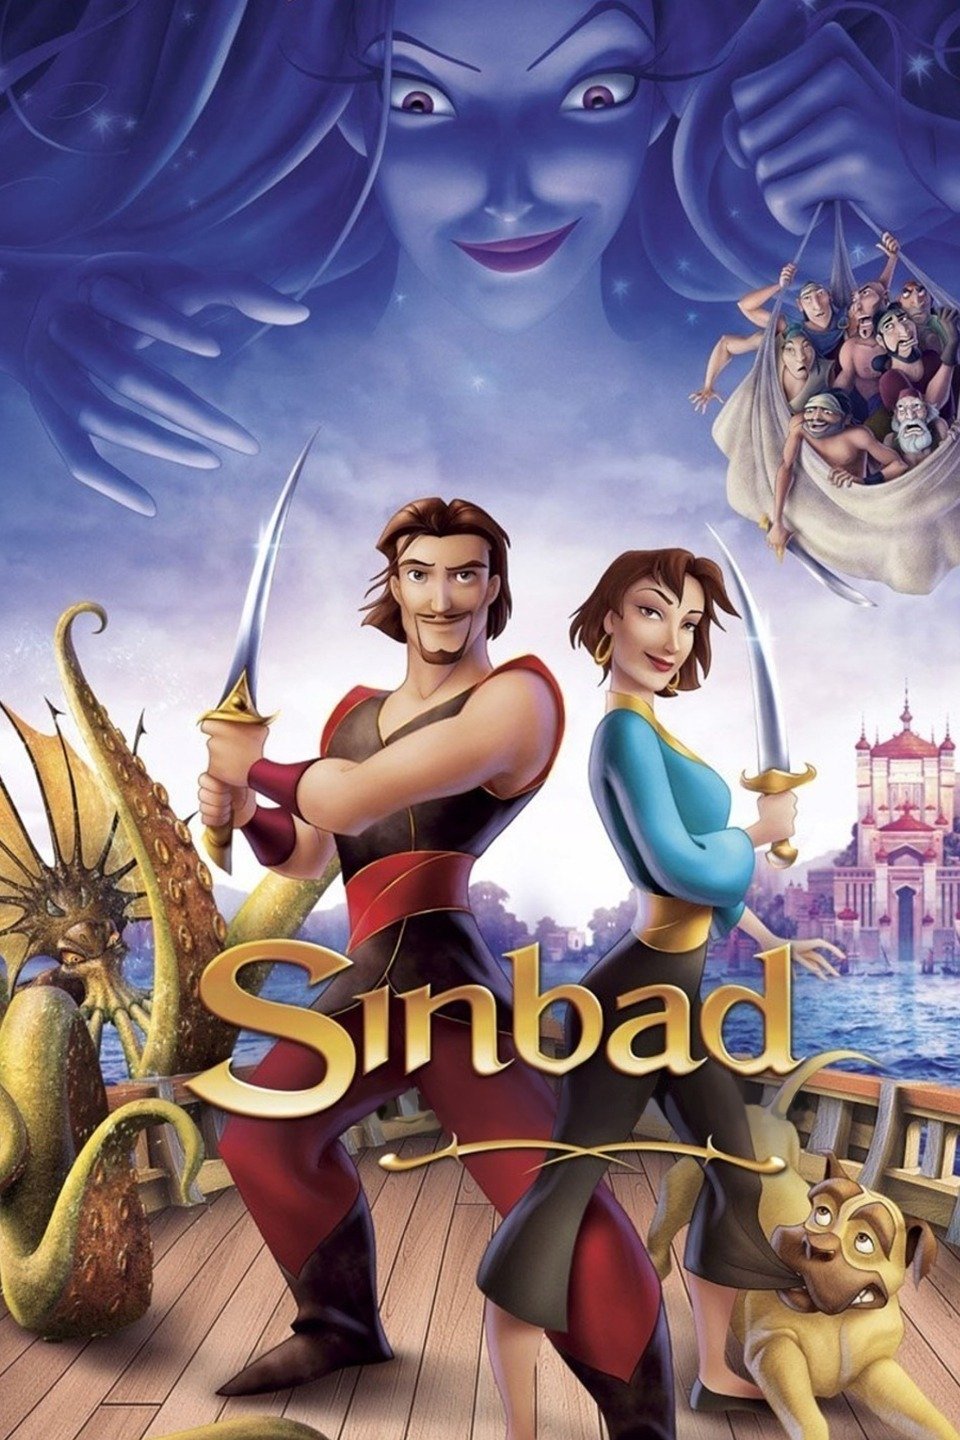 [MINI-HD] Sinbad Legend of The Seven Seas (2003) ซินแบด พิชิตตำนาน 7 คาบสมุทร [1080p] [พากย์ไทย 5.1 + เสียงอังกฤษ 5.1] [บรรยายอังกฤษ + เวียดนาม] [เสียงไทย + ซับ ENG] [OPENLOAD]